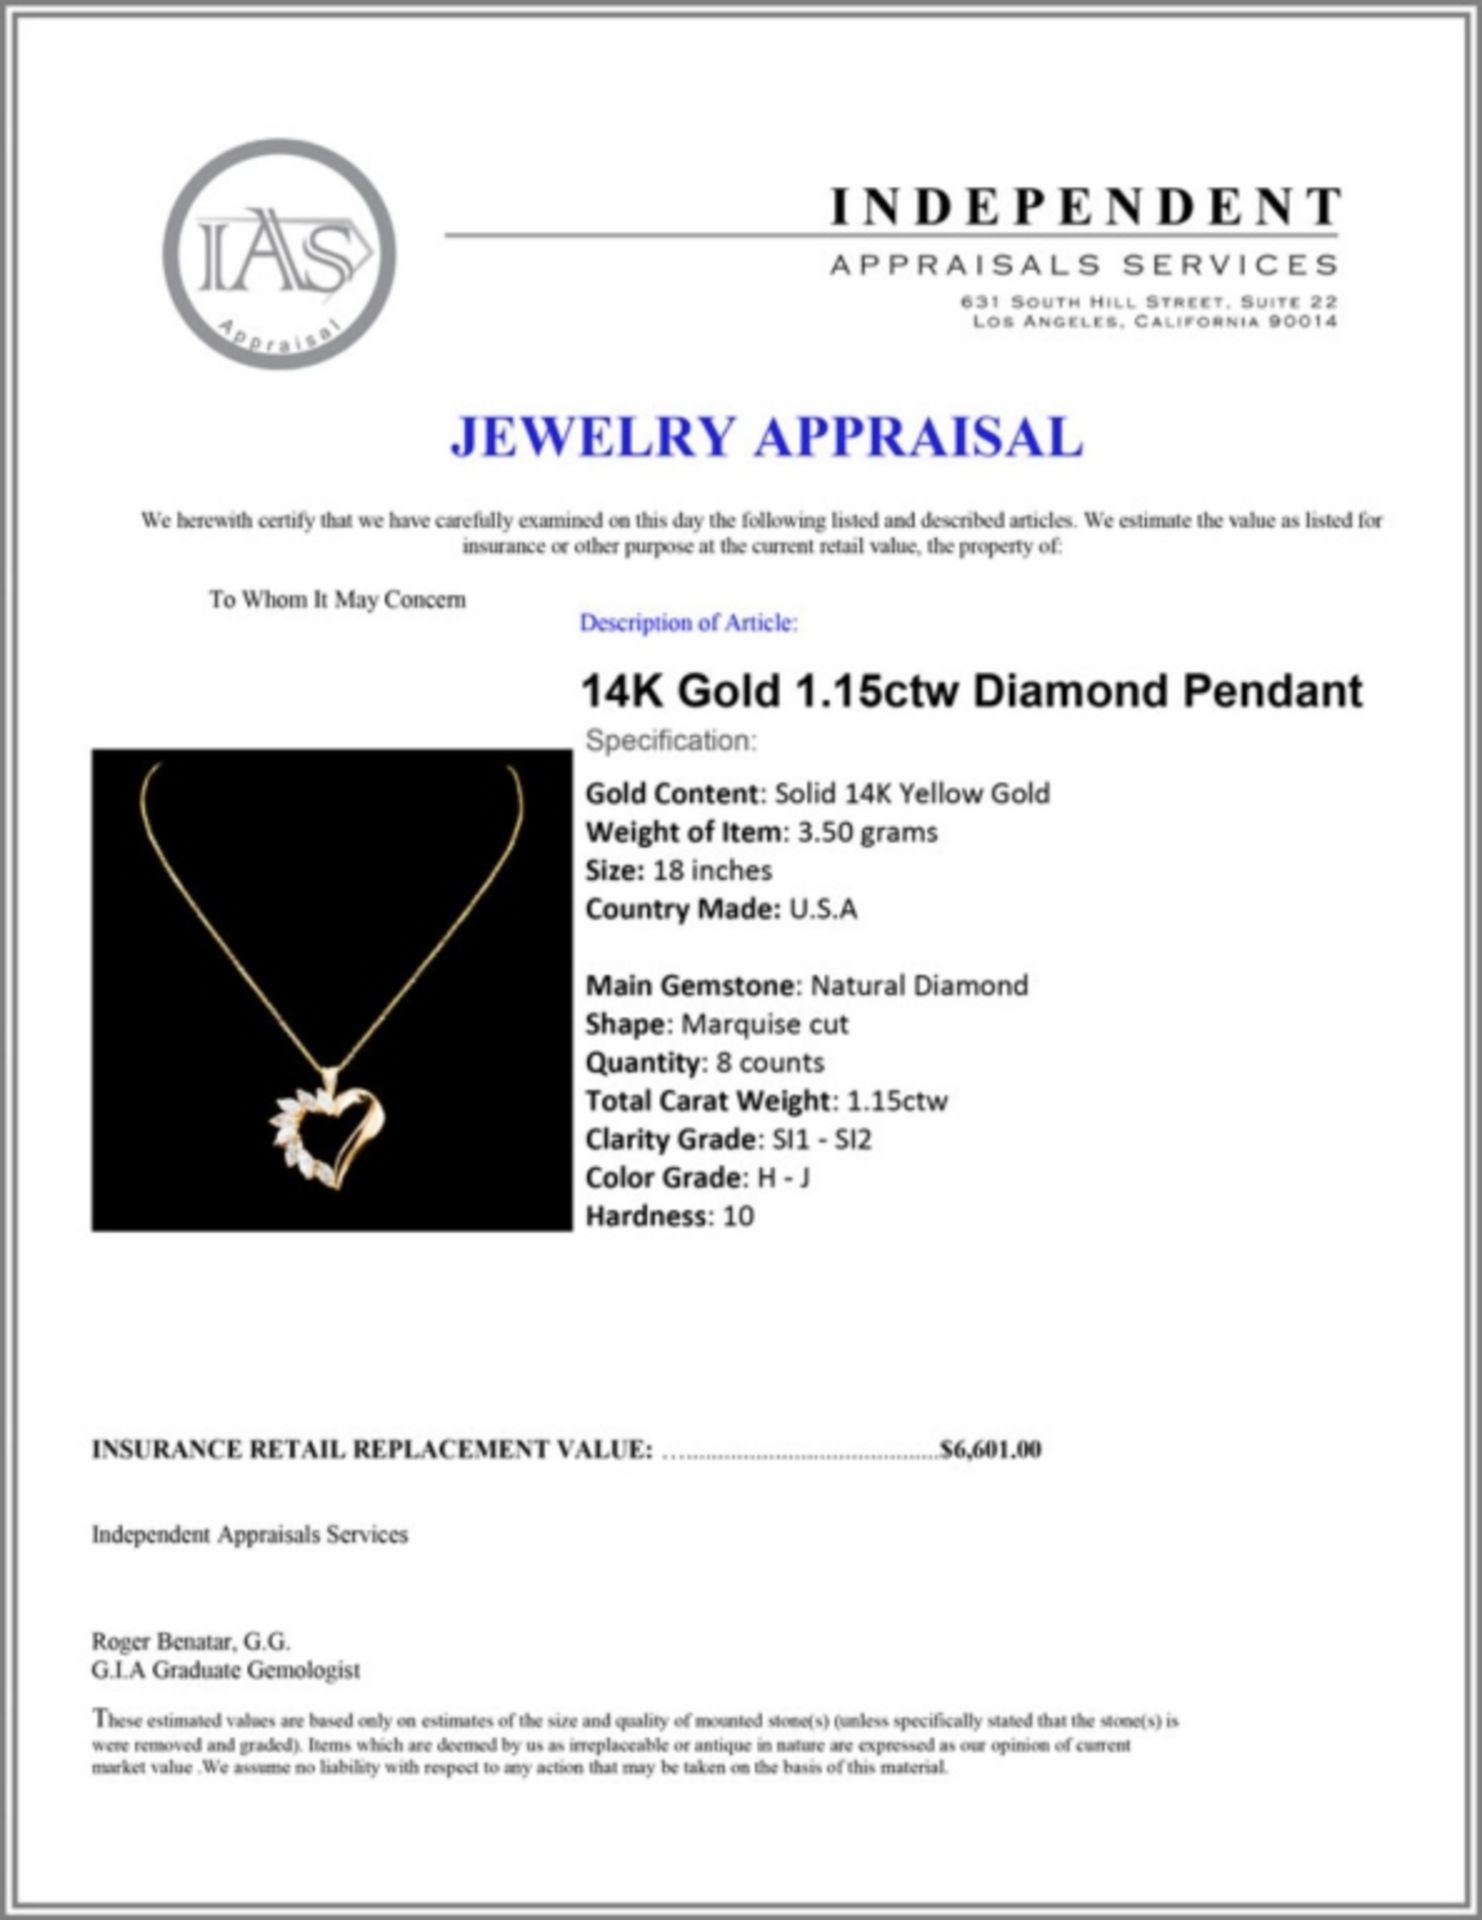 14K Gold 1.15ctw Diamond Pendant - Image 4 of 4